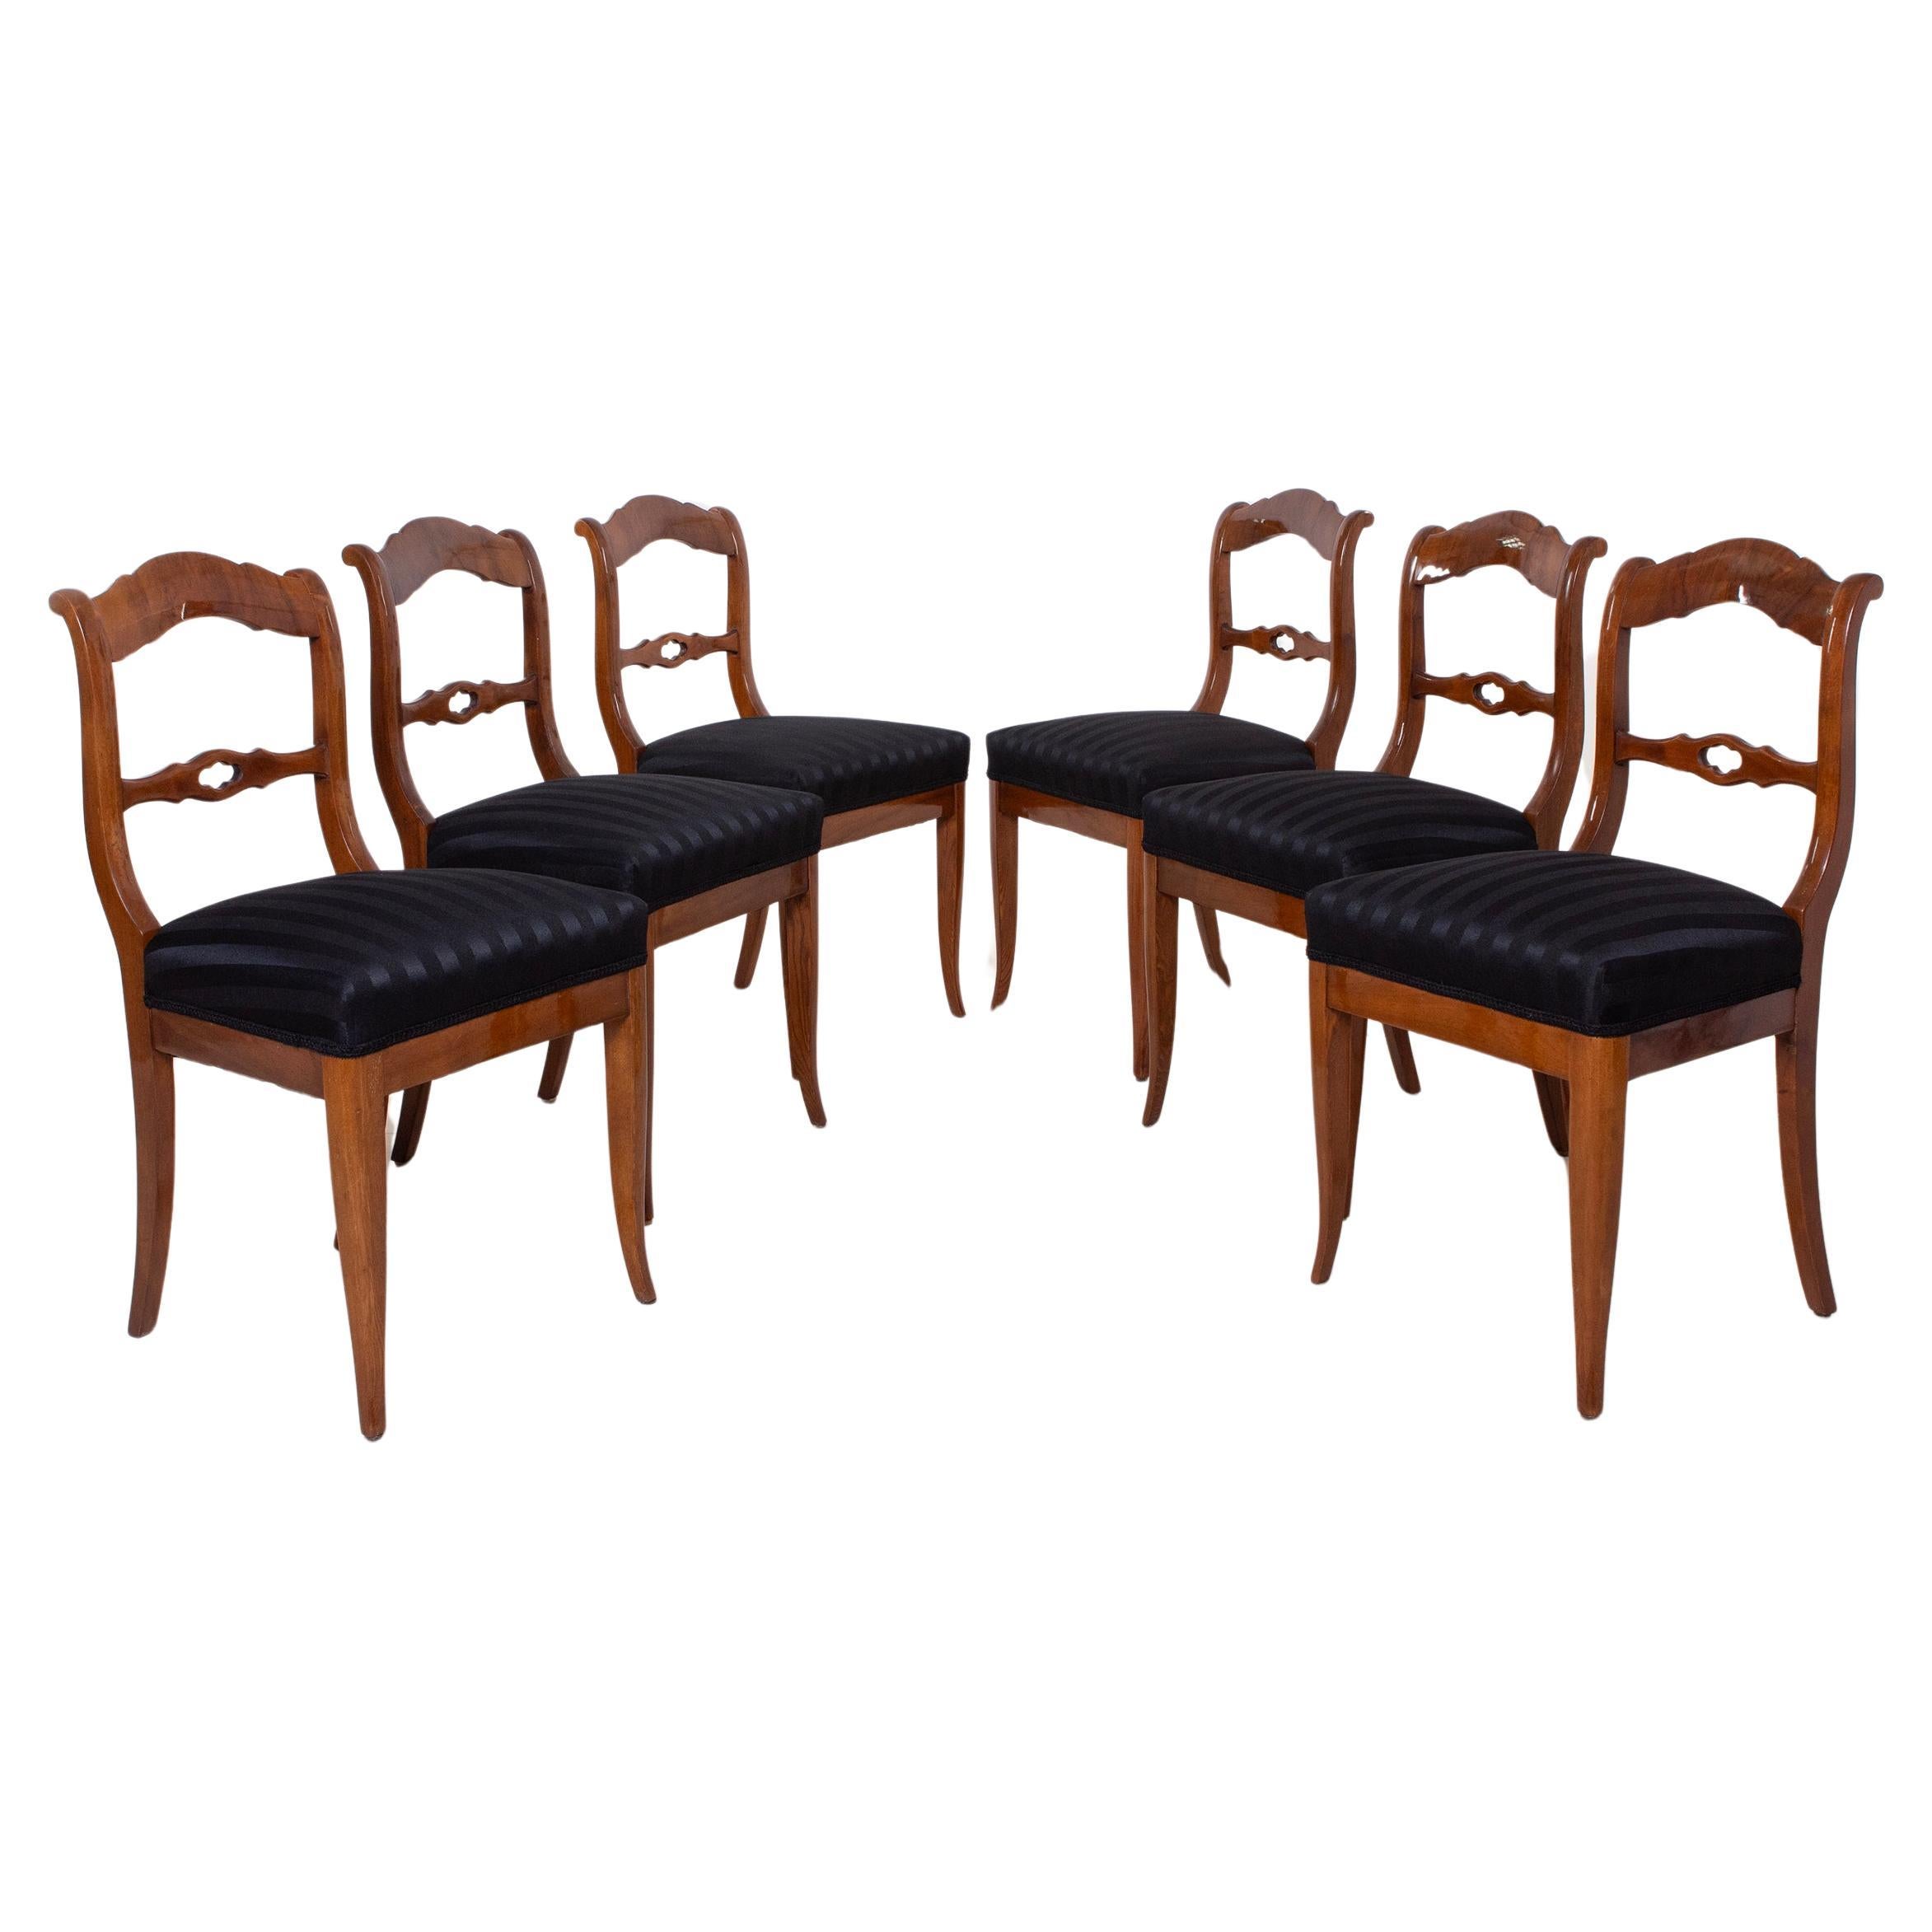 Set of 6 Biedermeier Elegant Black Chairs, Germany, 19th Century, Fully Restored